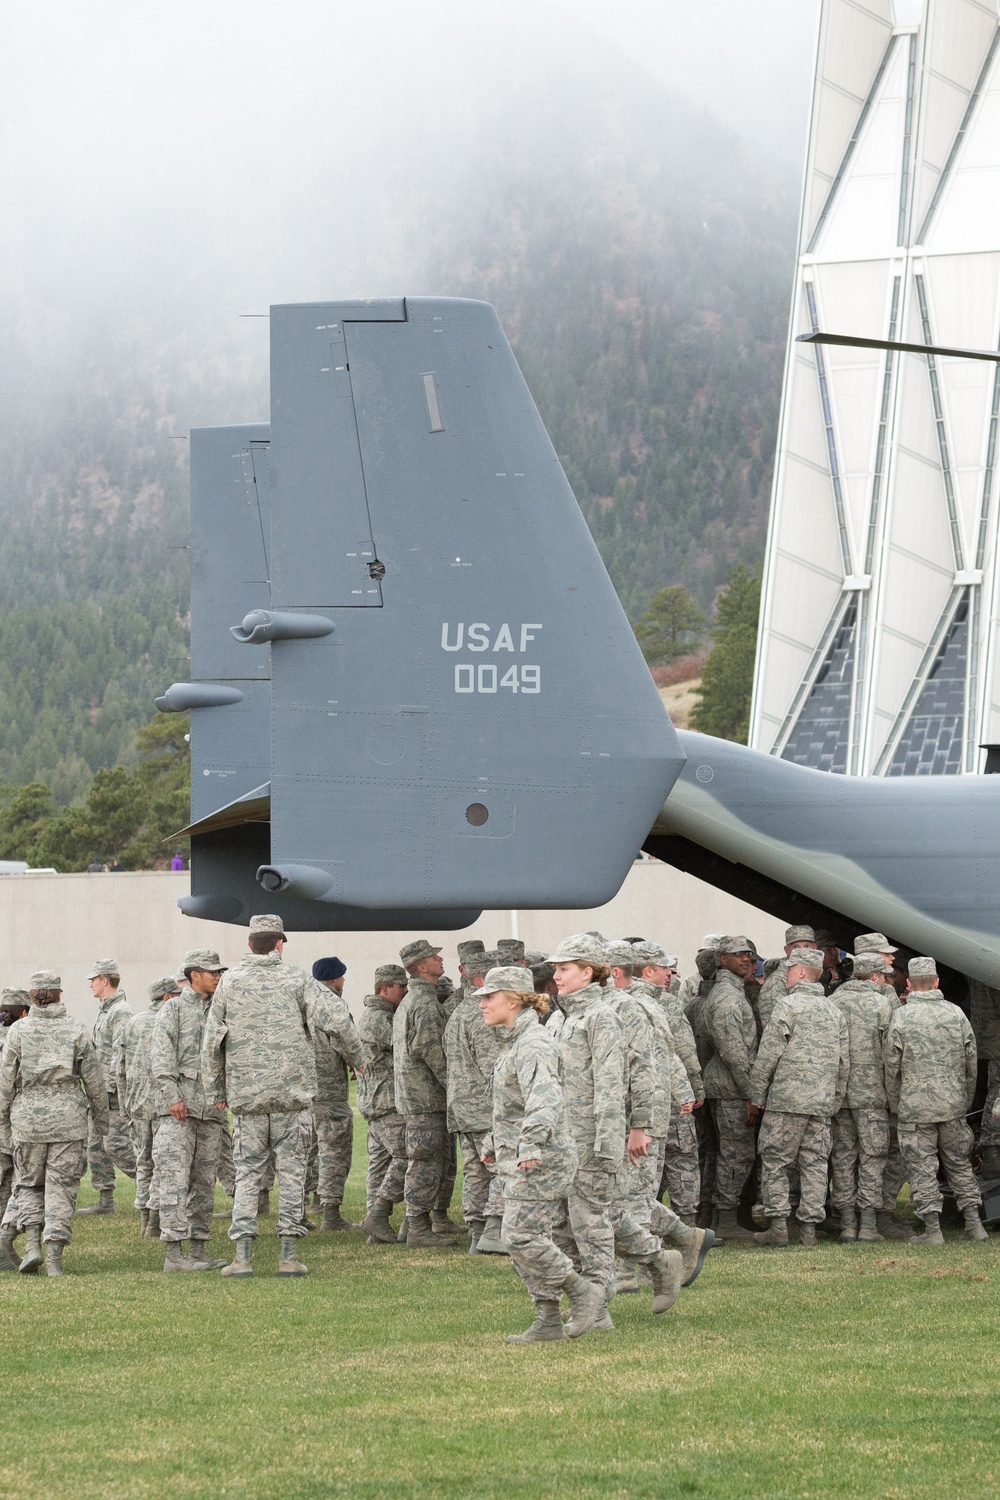 04-15-16 U.S. Air Force Academy CV-22 Landing on Terrazzo